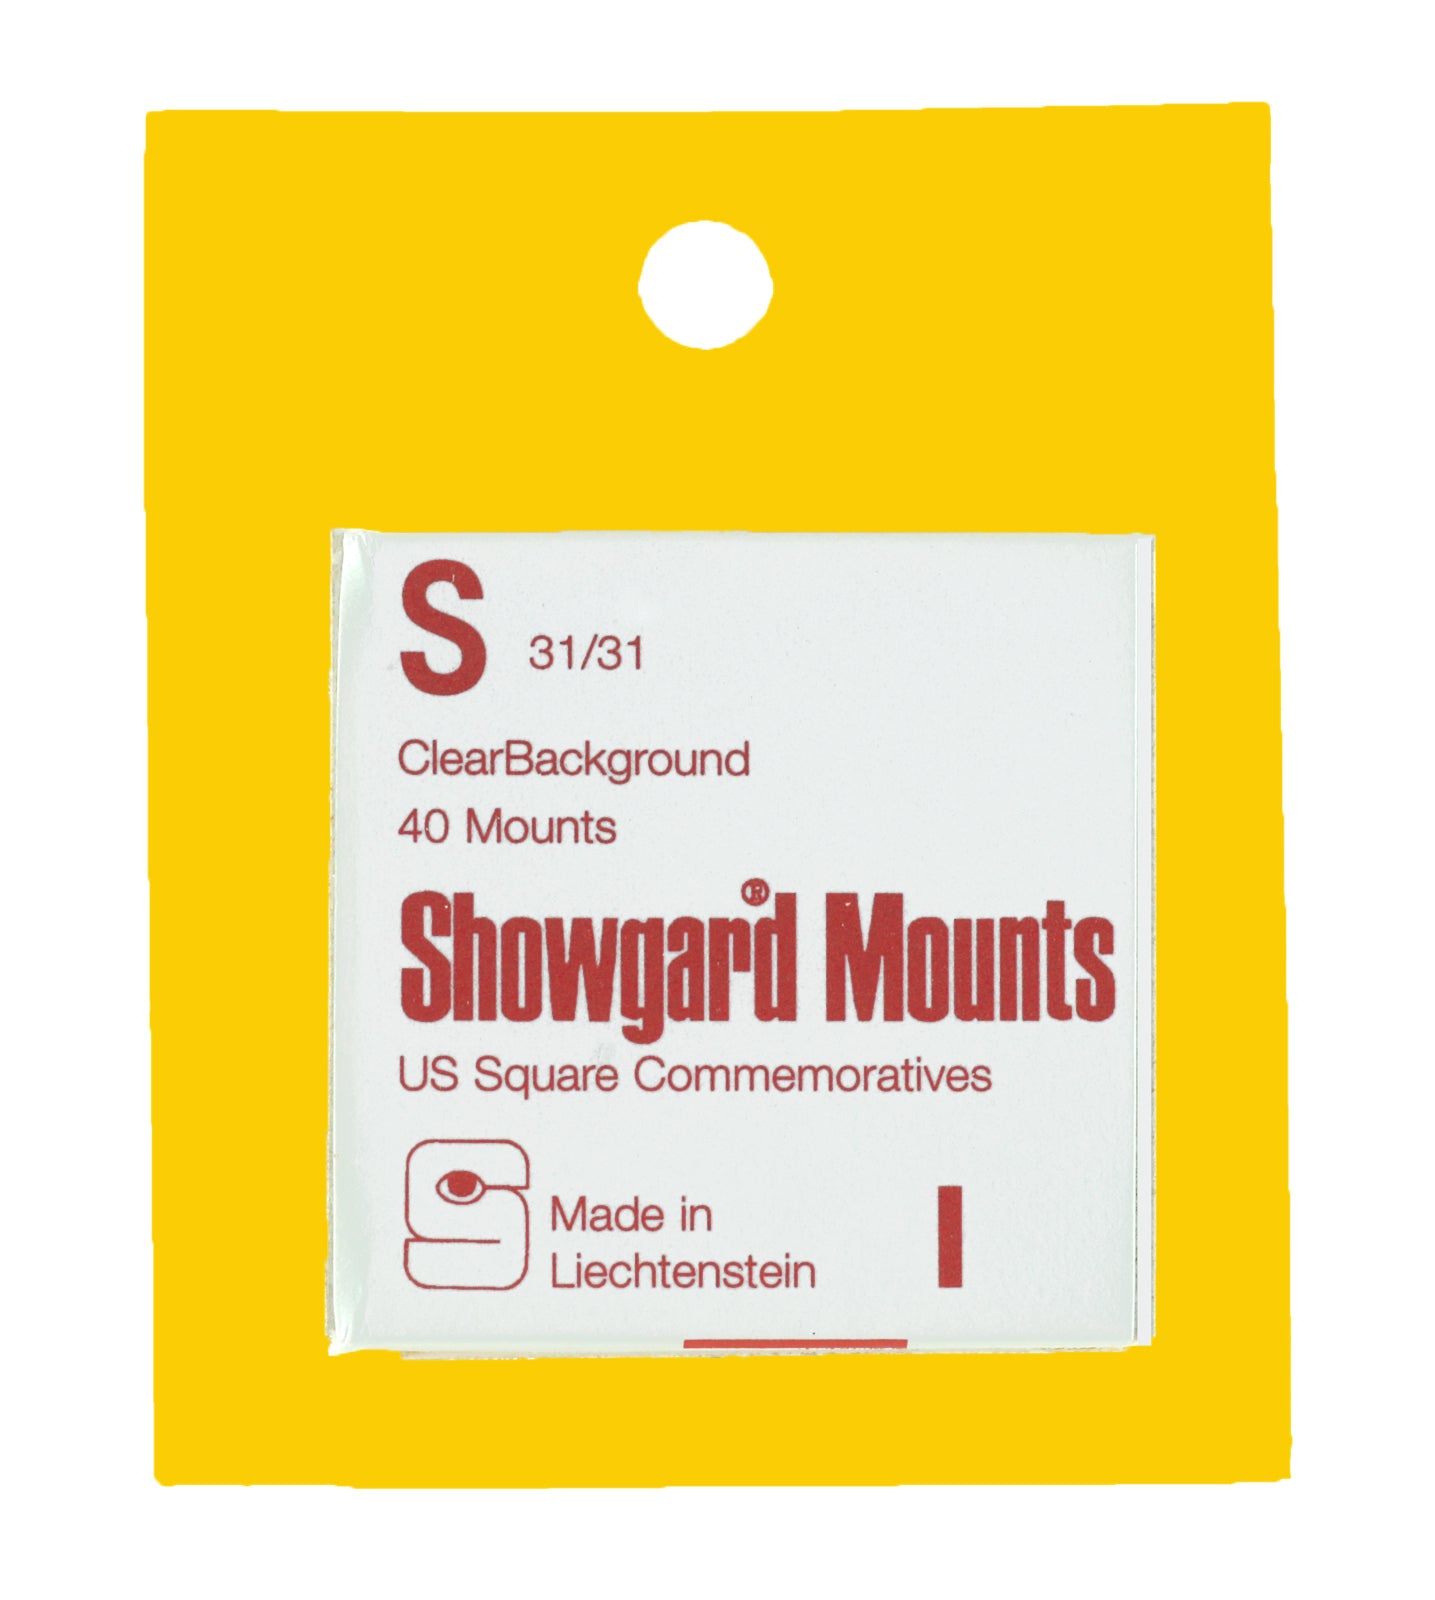 Showgard Mounts S